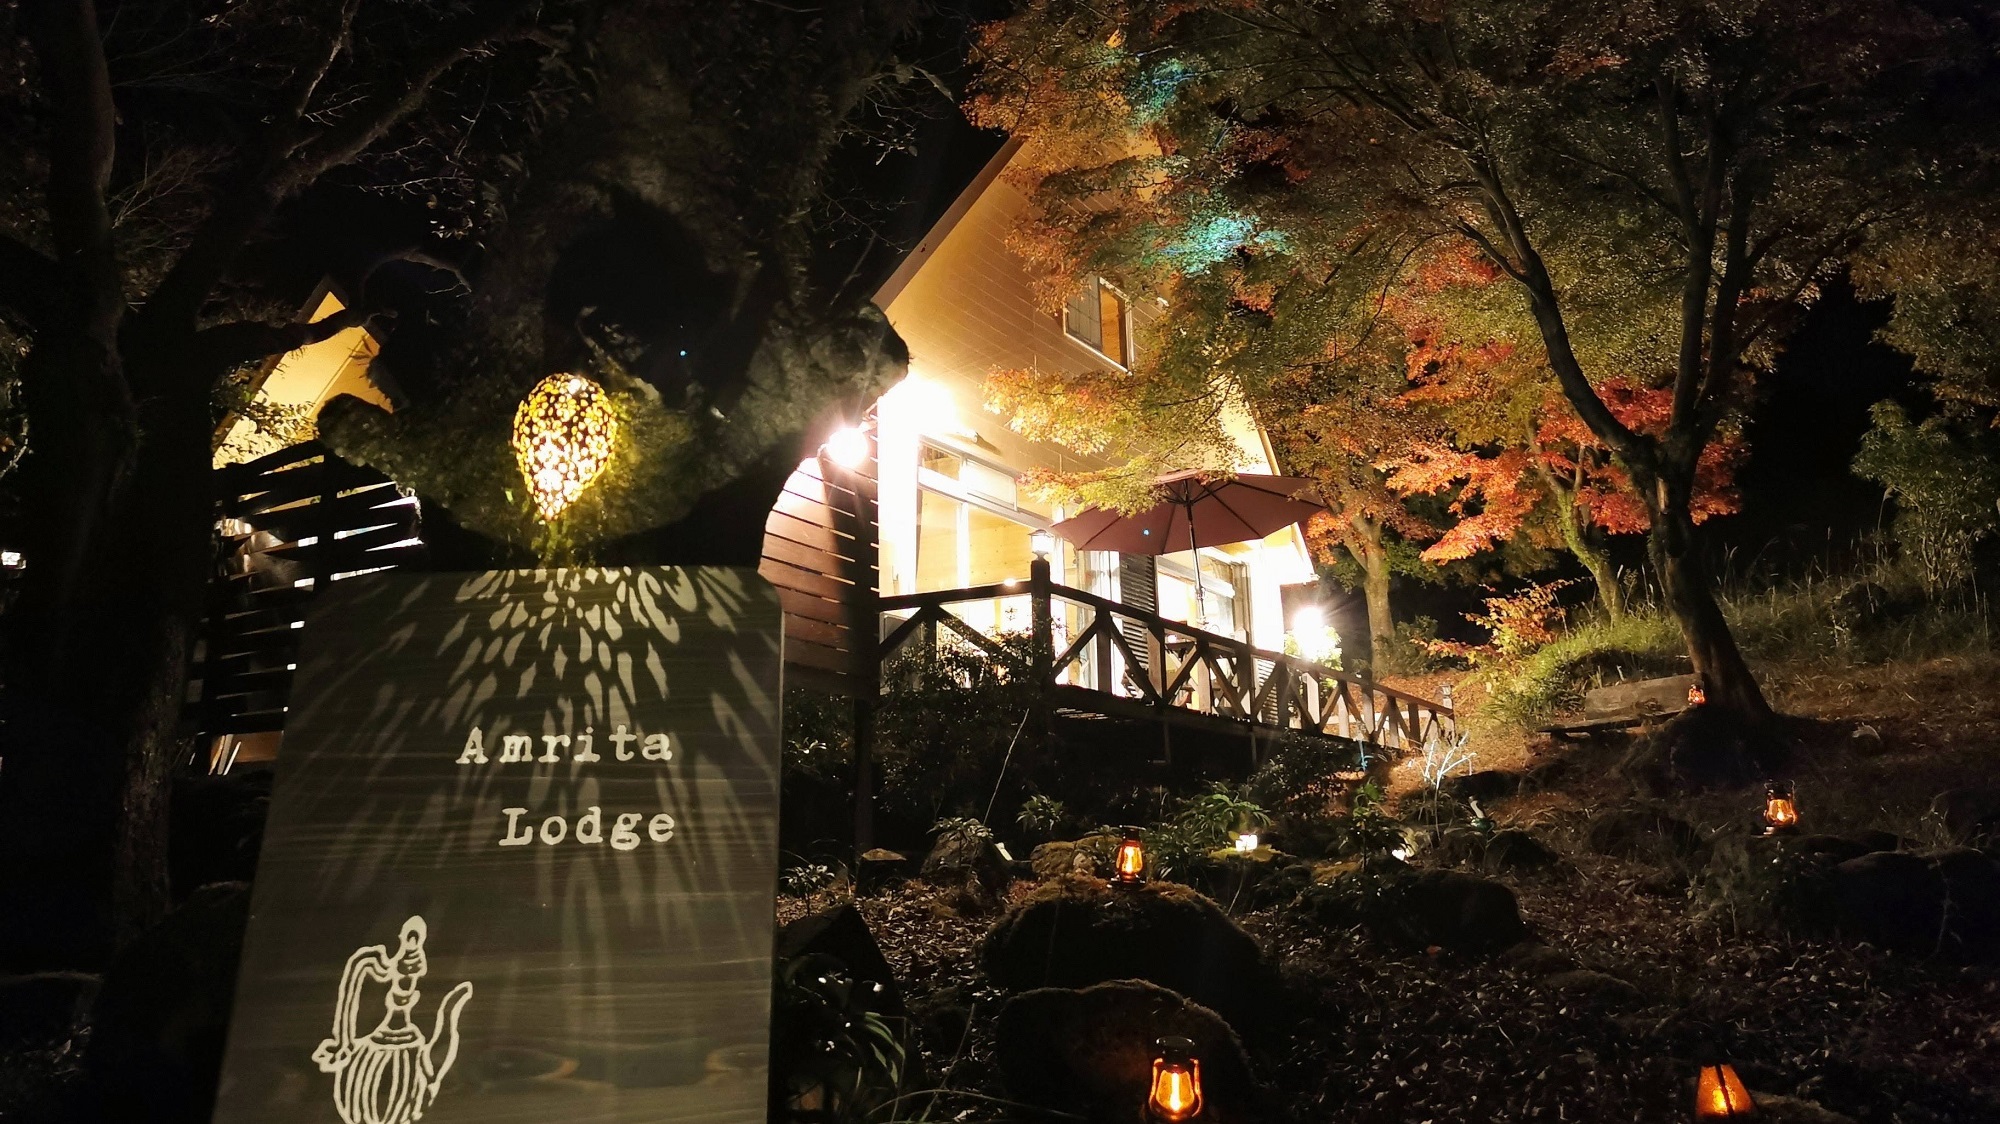 Amrita Lodge image